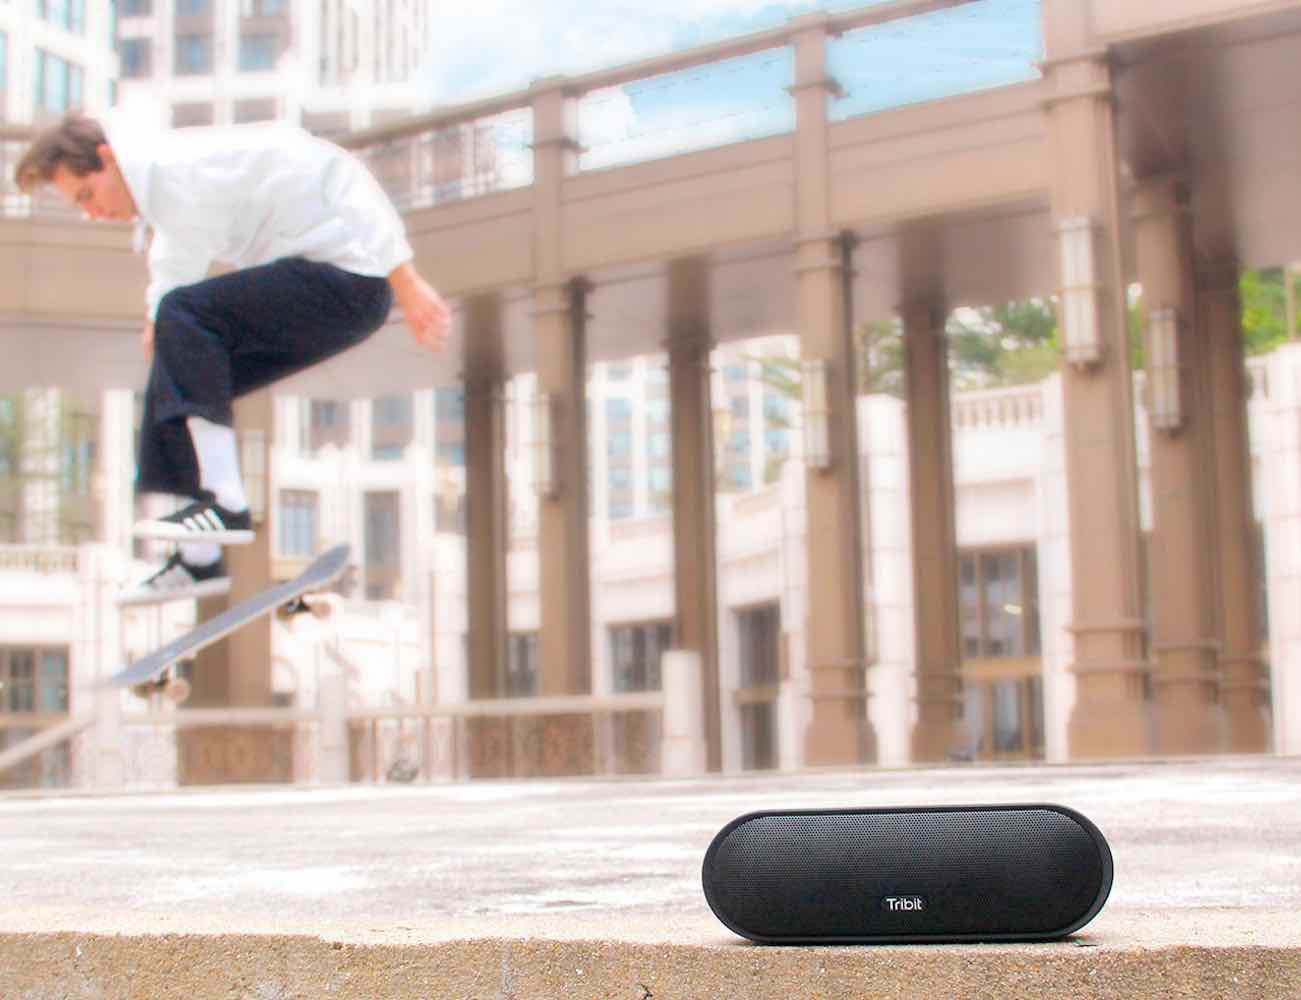 Tribit MaxSound Plus Extra Bass Portable Speaker goes wherever you go